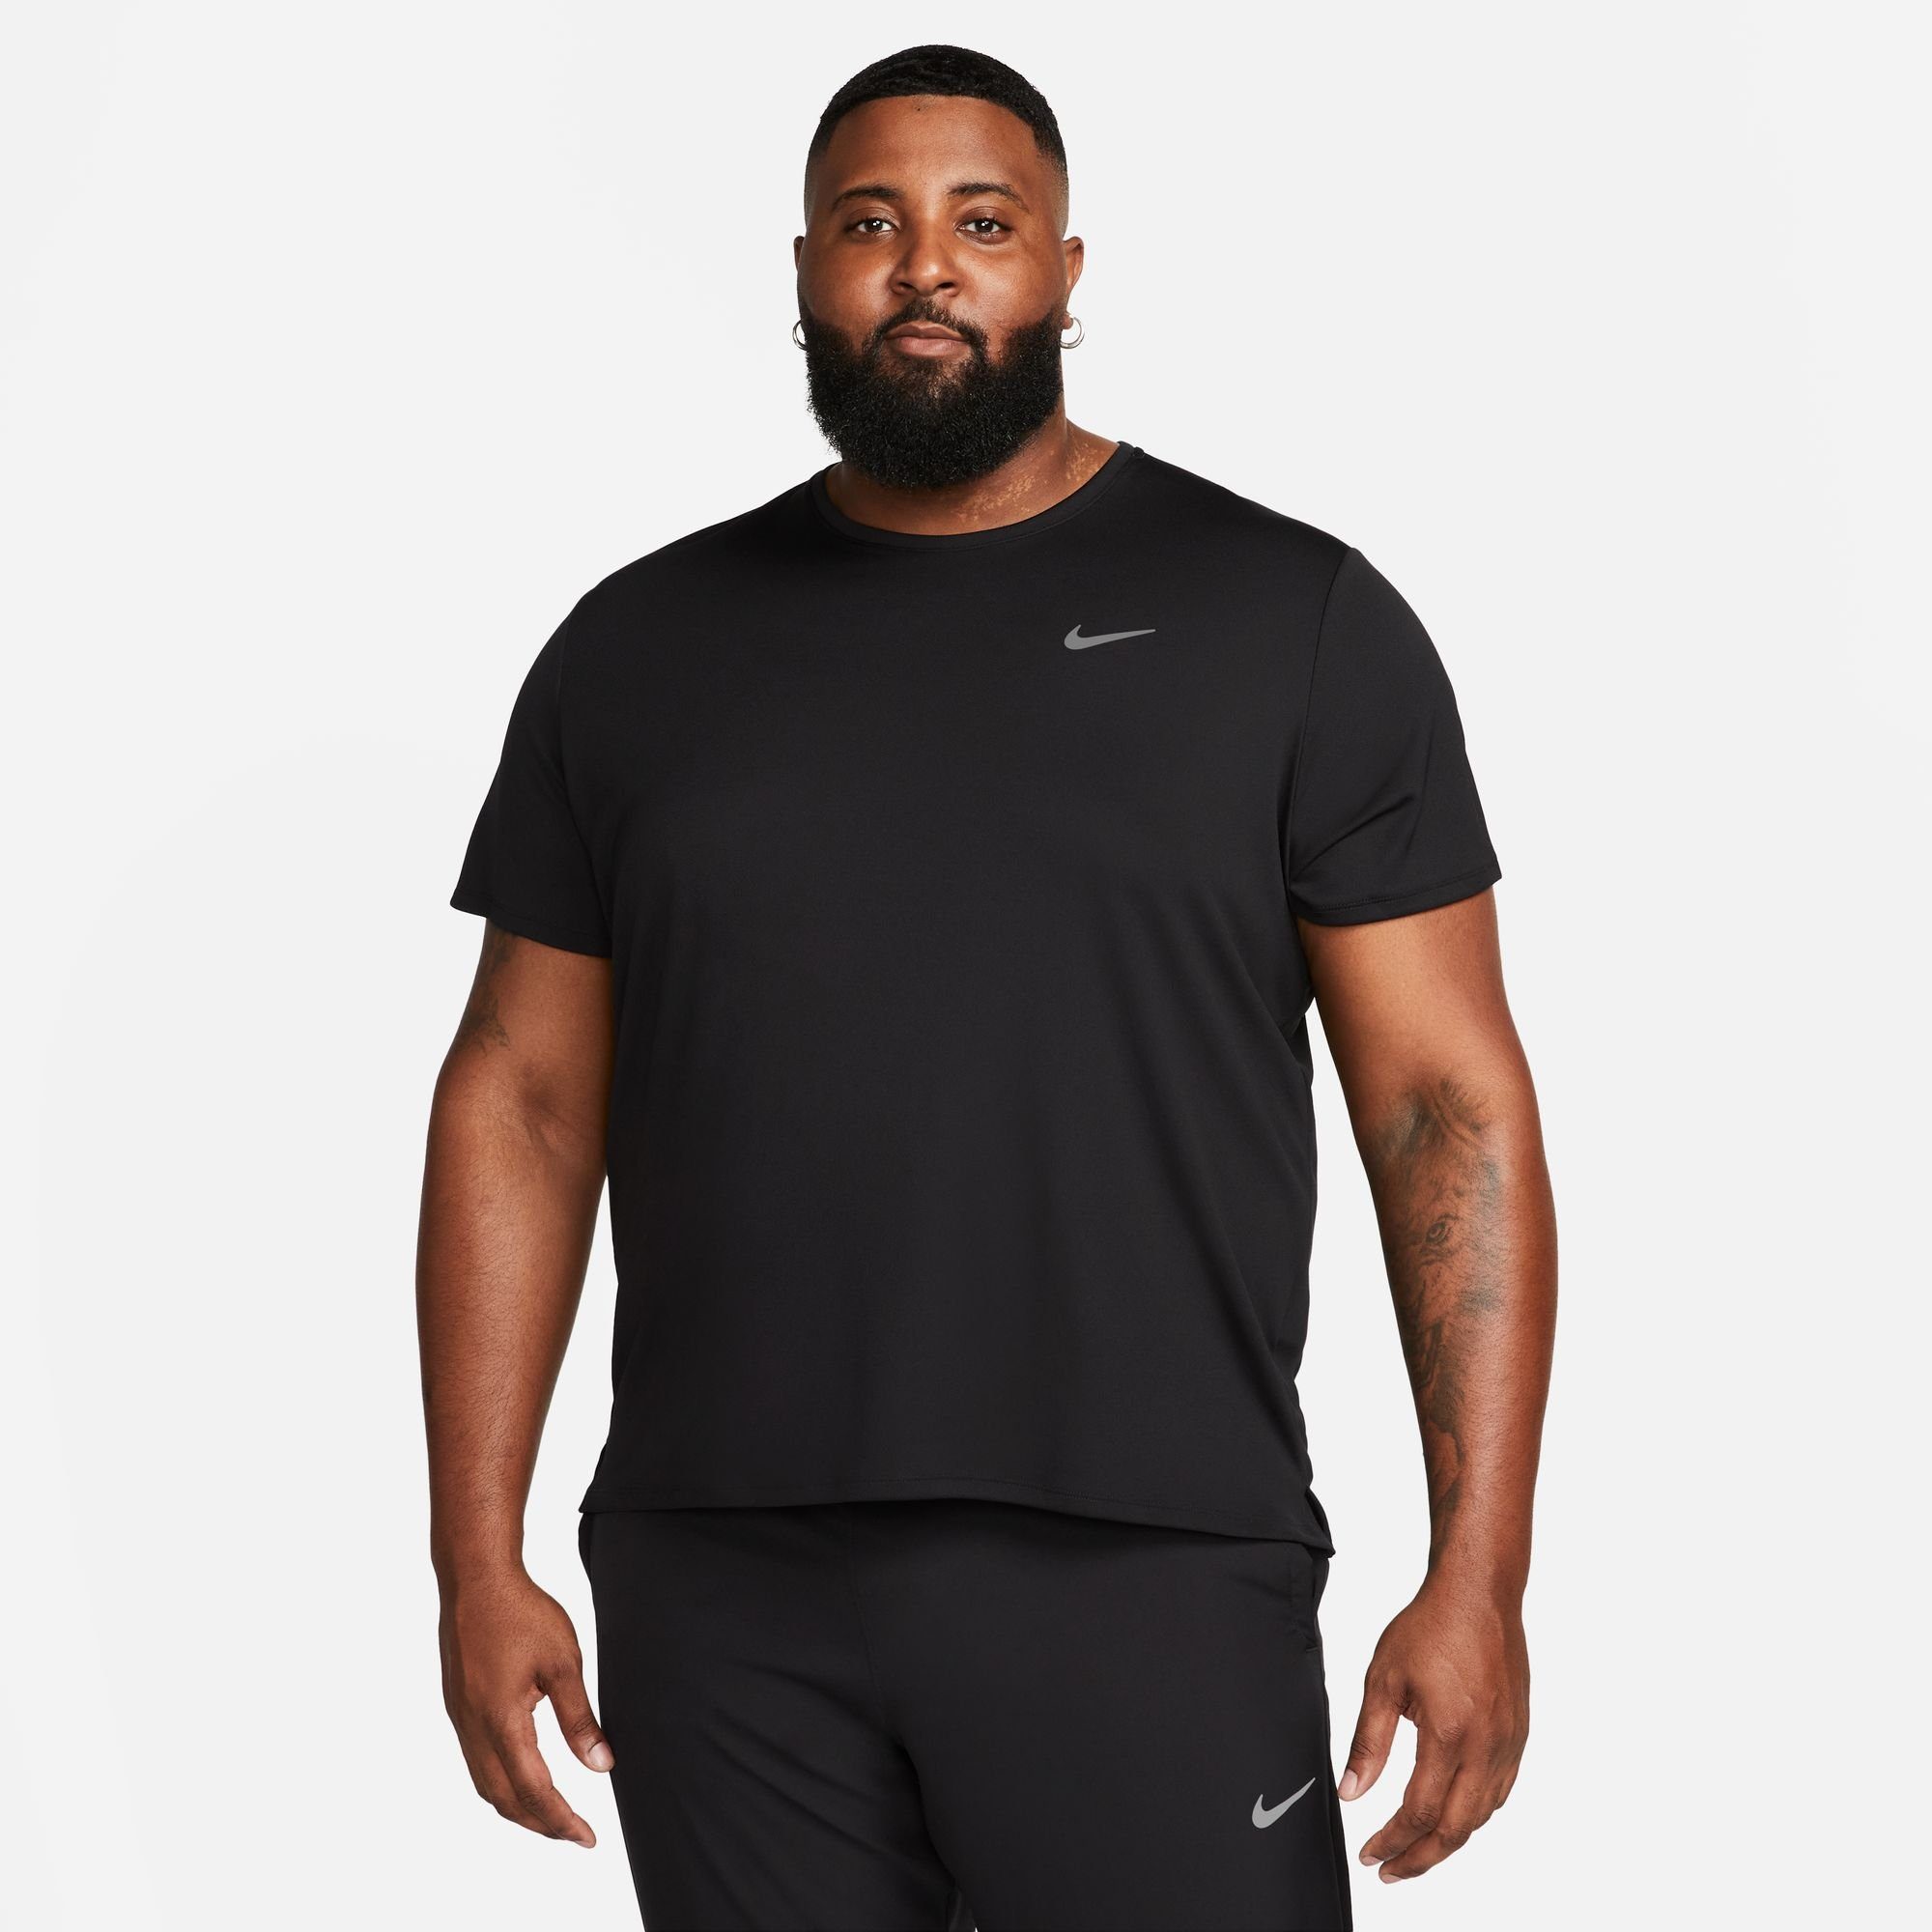 SILV TOP Nike DRI-FIT MEN'S BLACK/REFLECTIVE UV Laufshirt MILER SHORT-SLEEVE RUNNING